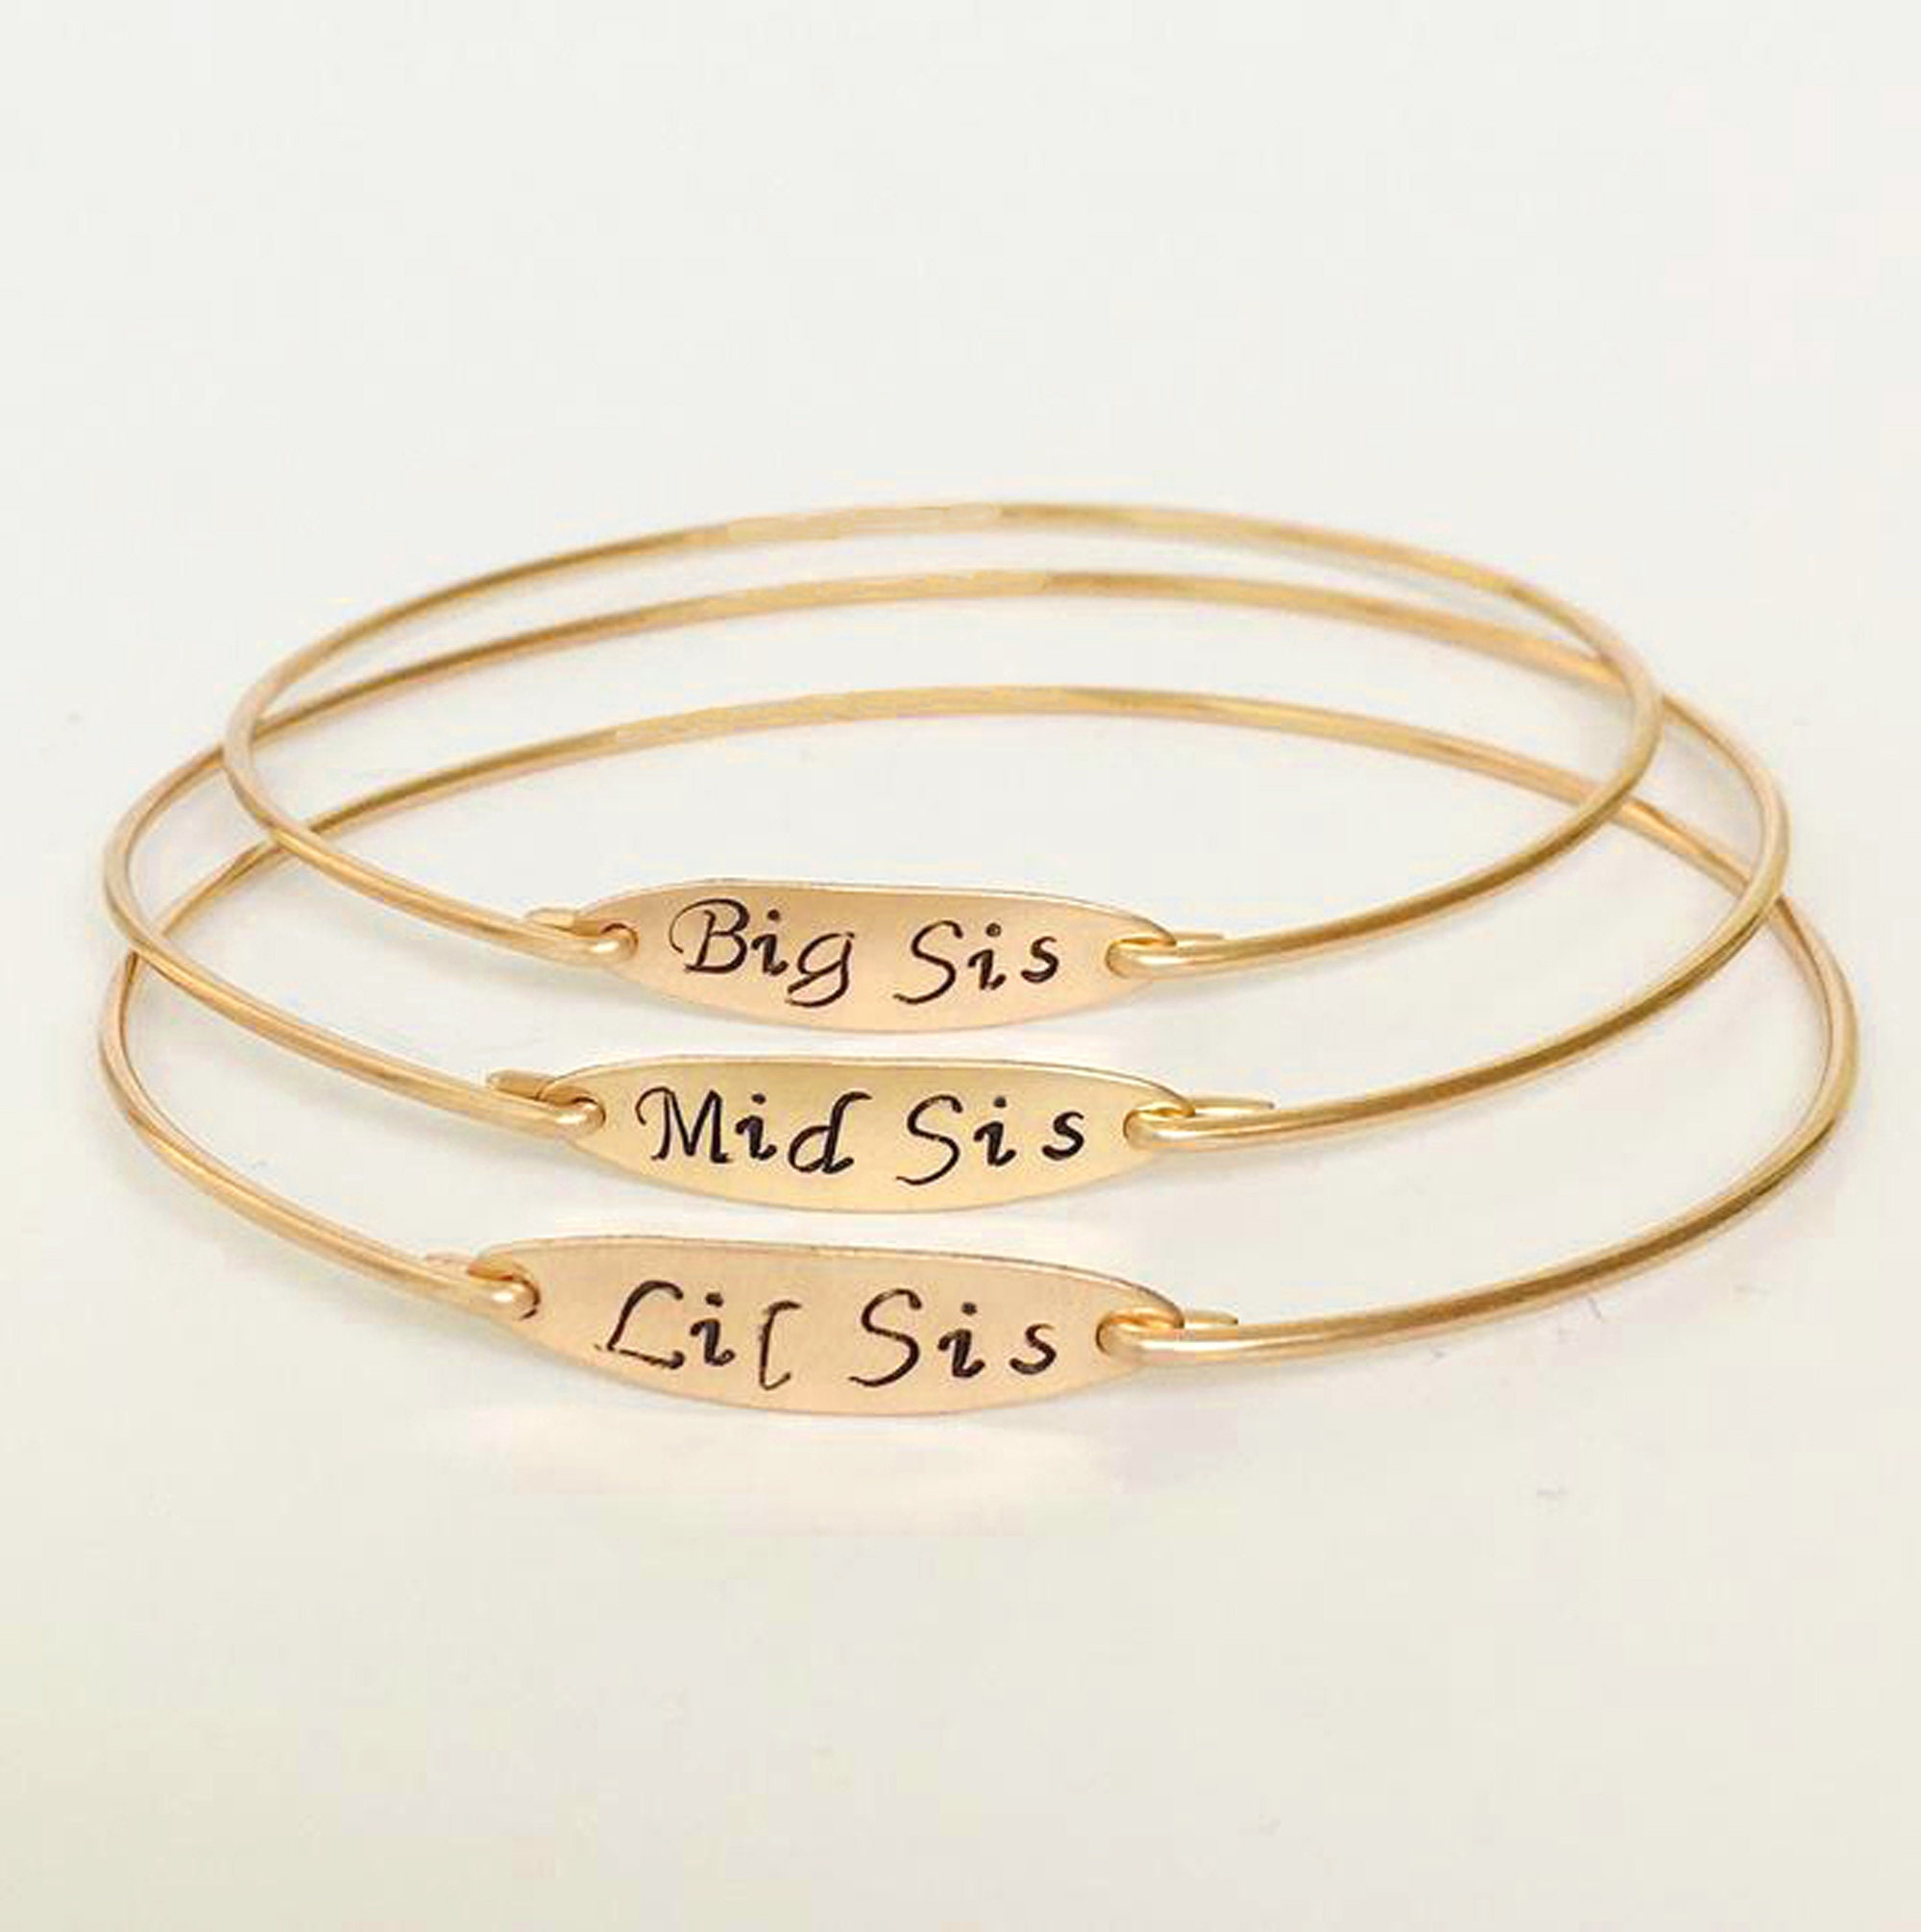 Wide Cuff Bracelets Leaf Shape Open Cool Big Bangle Charms Jewelry | eBay